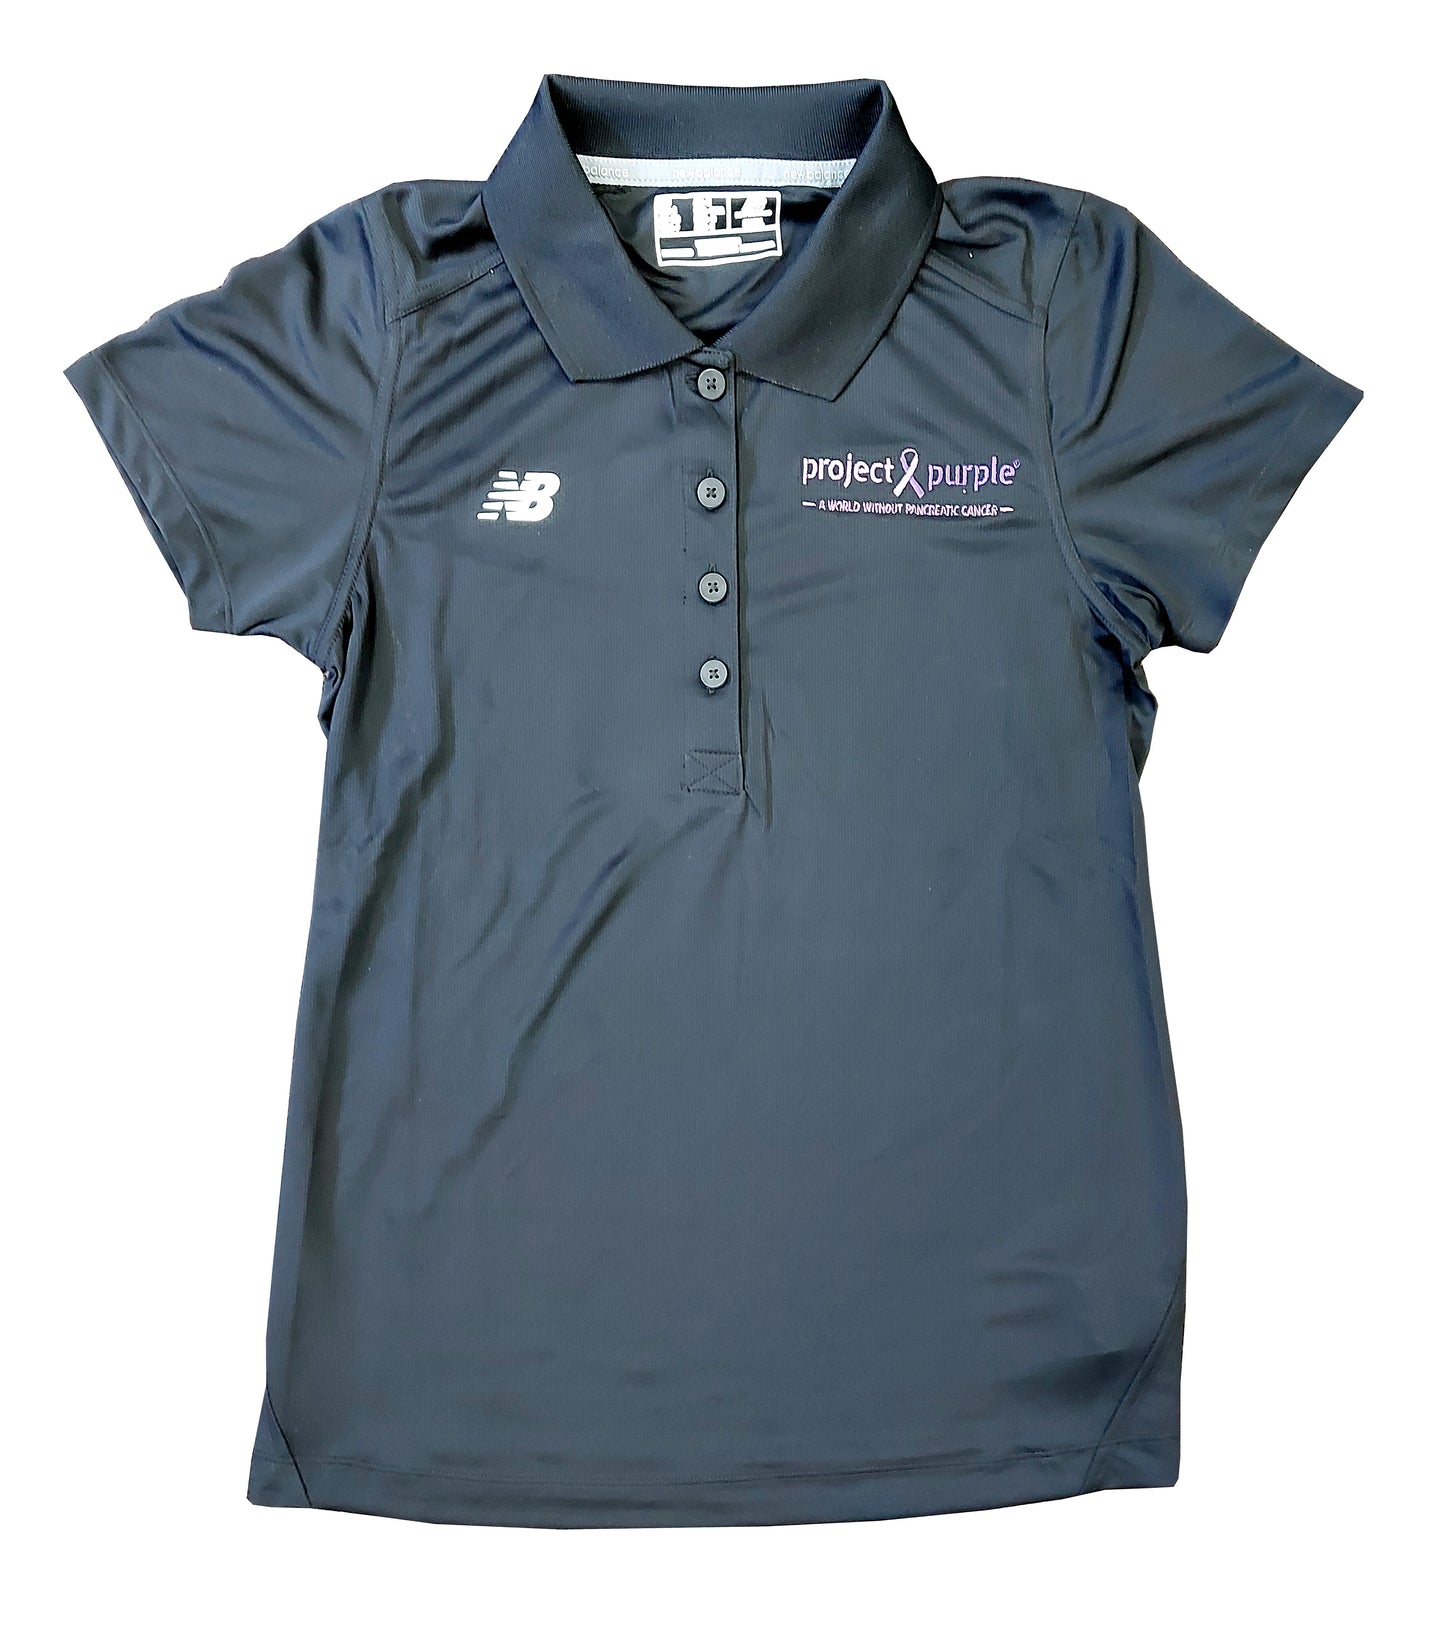 Black New Balance Polo Shirt with Project Purple Logo